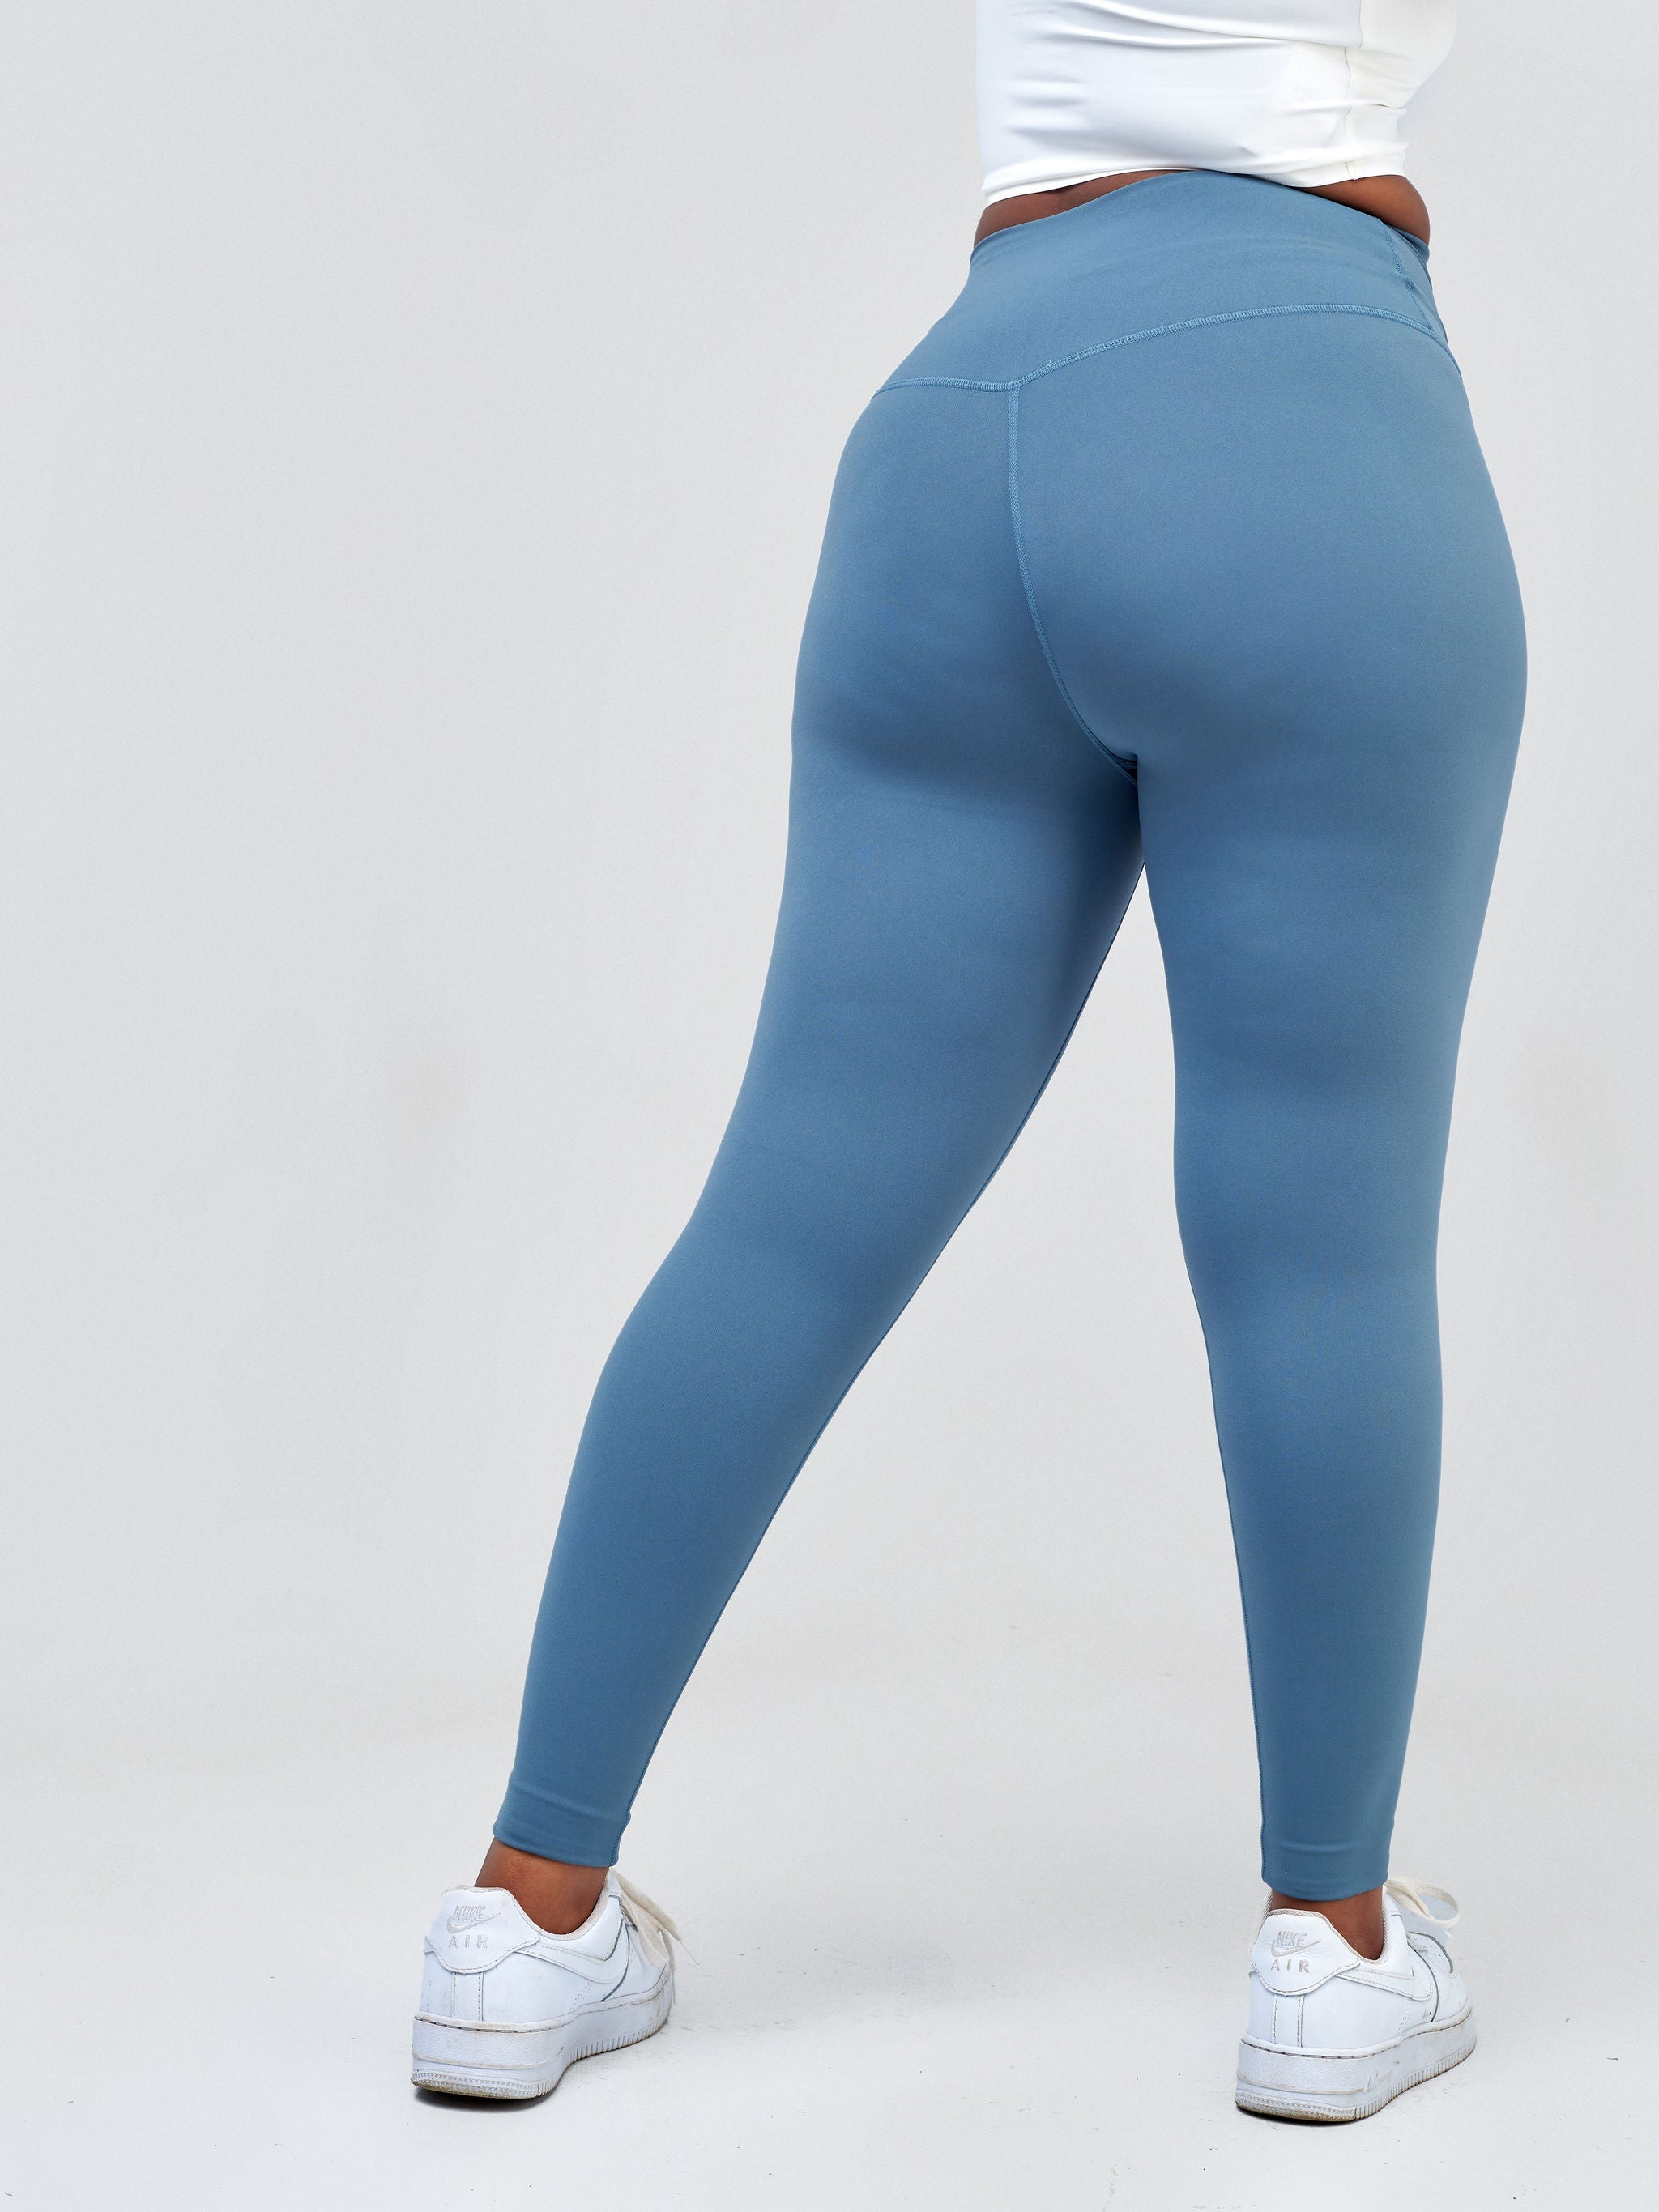 Ava Fitness Bella Workout Leggings - Code Blue